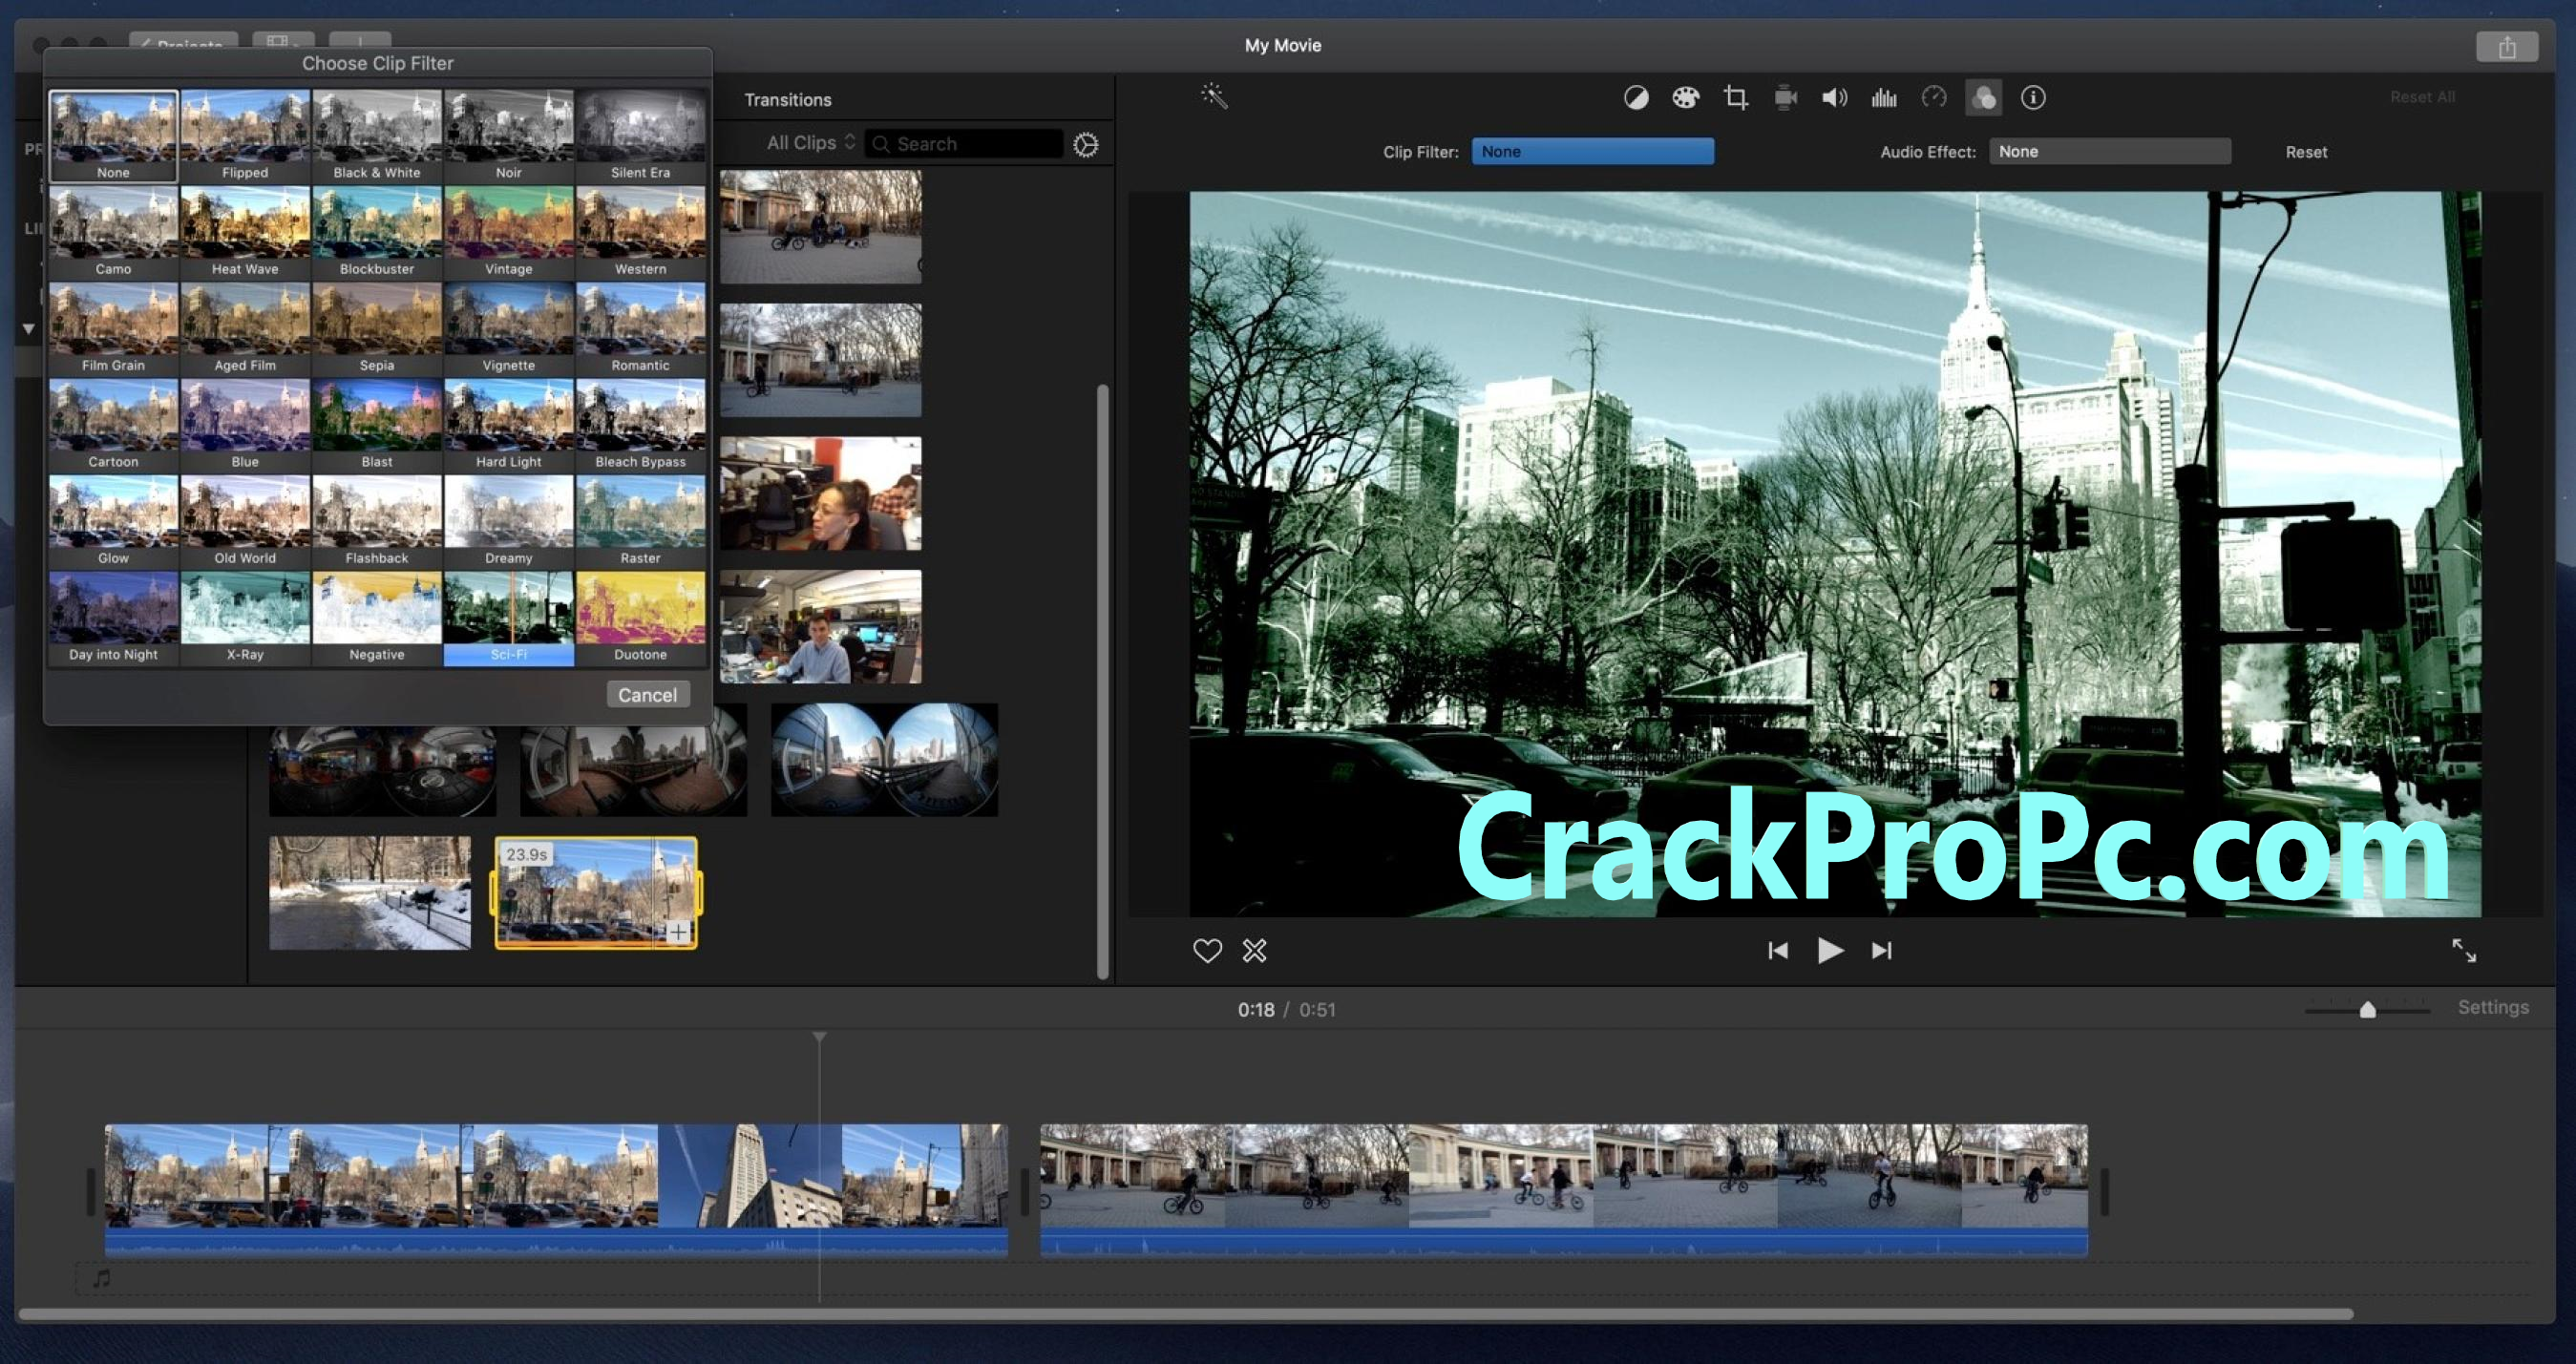 iMovie 10.3.4 Crack Win + Mac Full Latest Version Free Download 2022